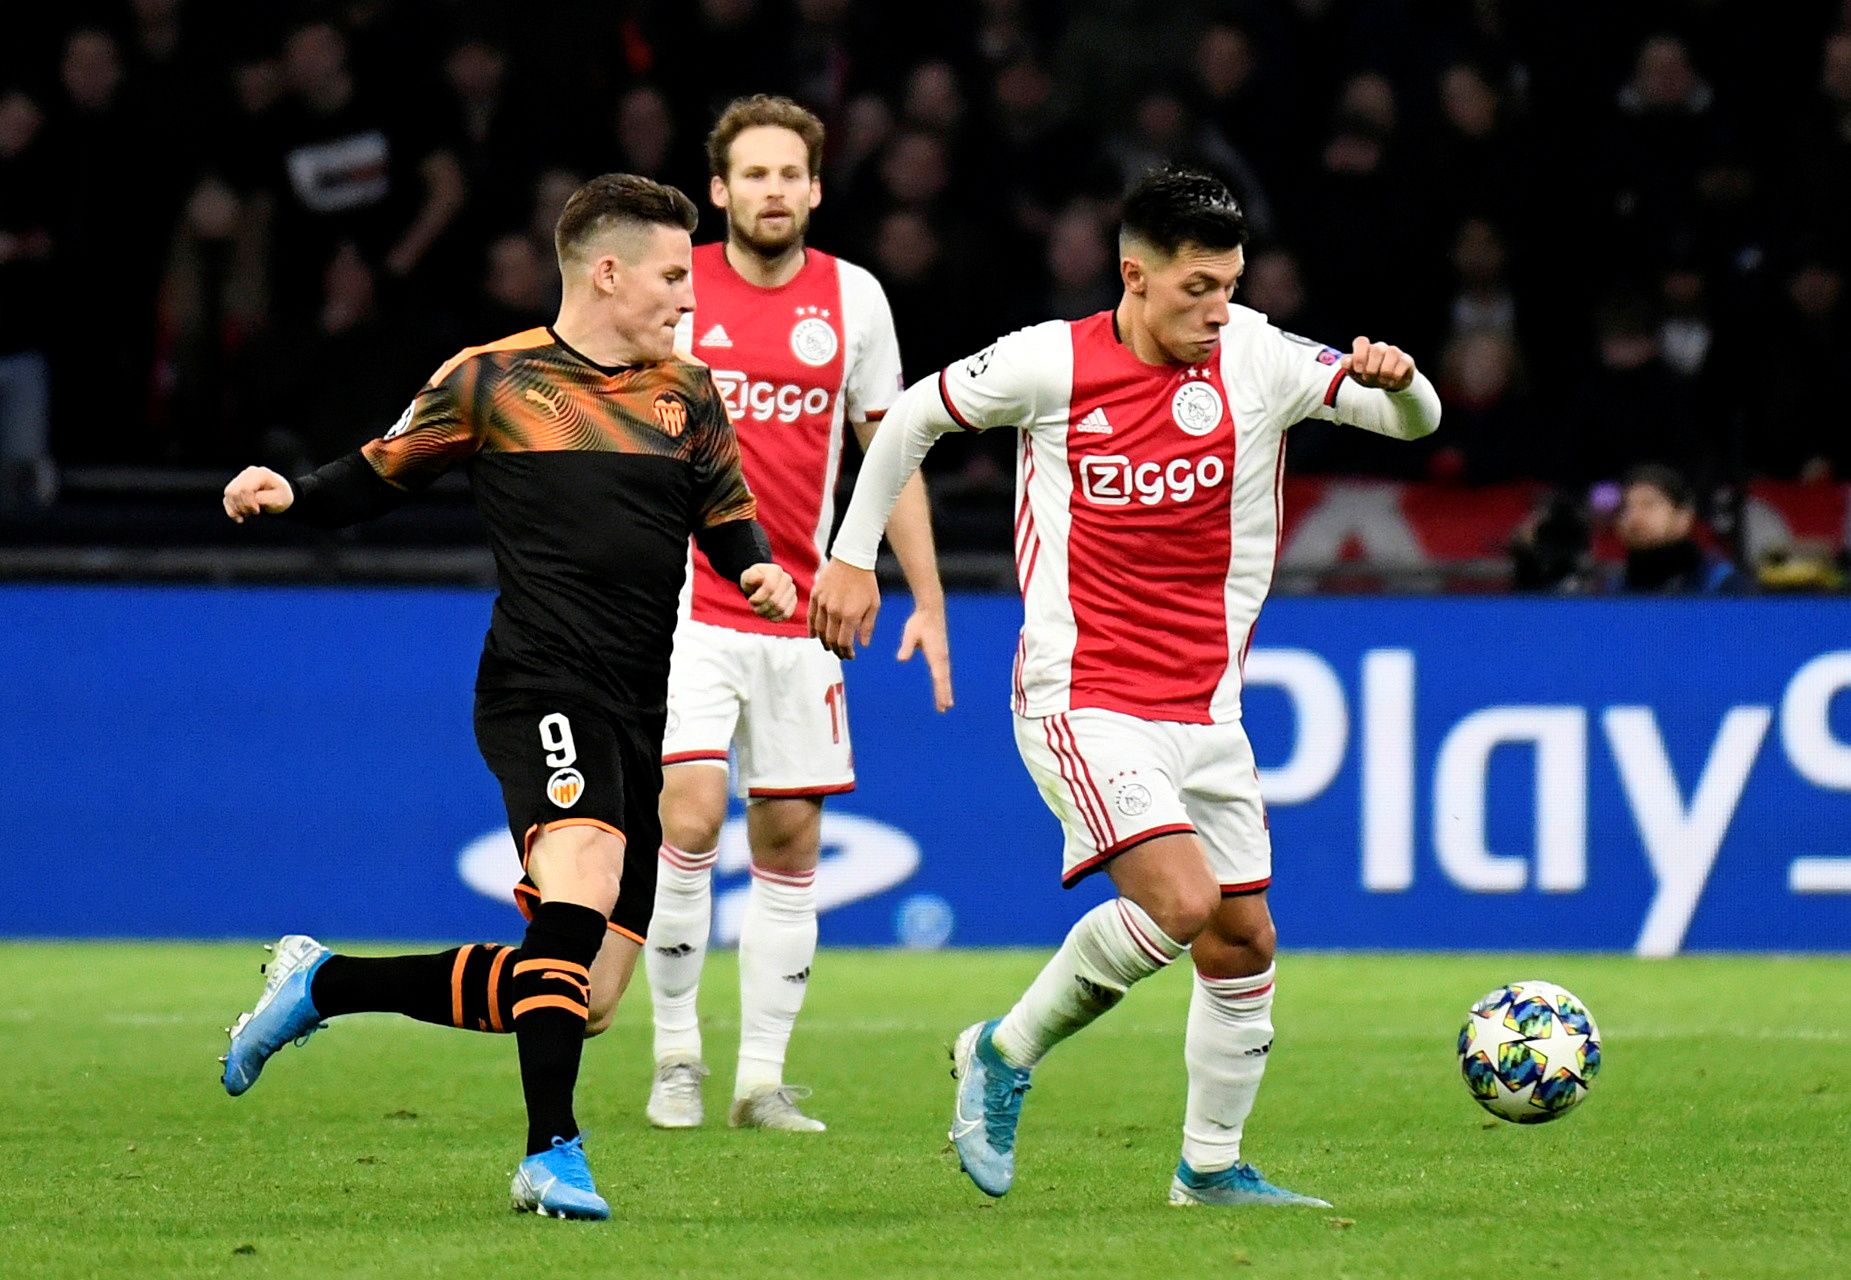 Ajax's Martinez on the ball.